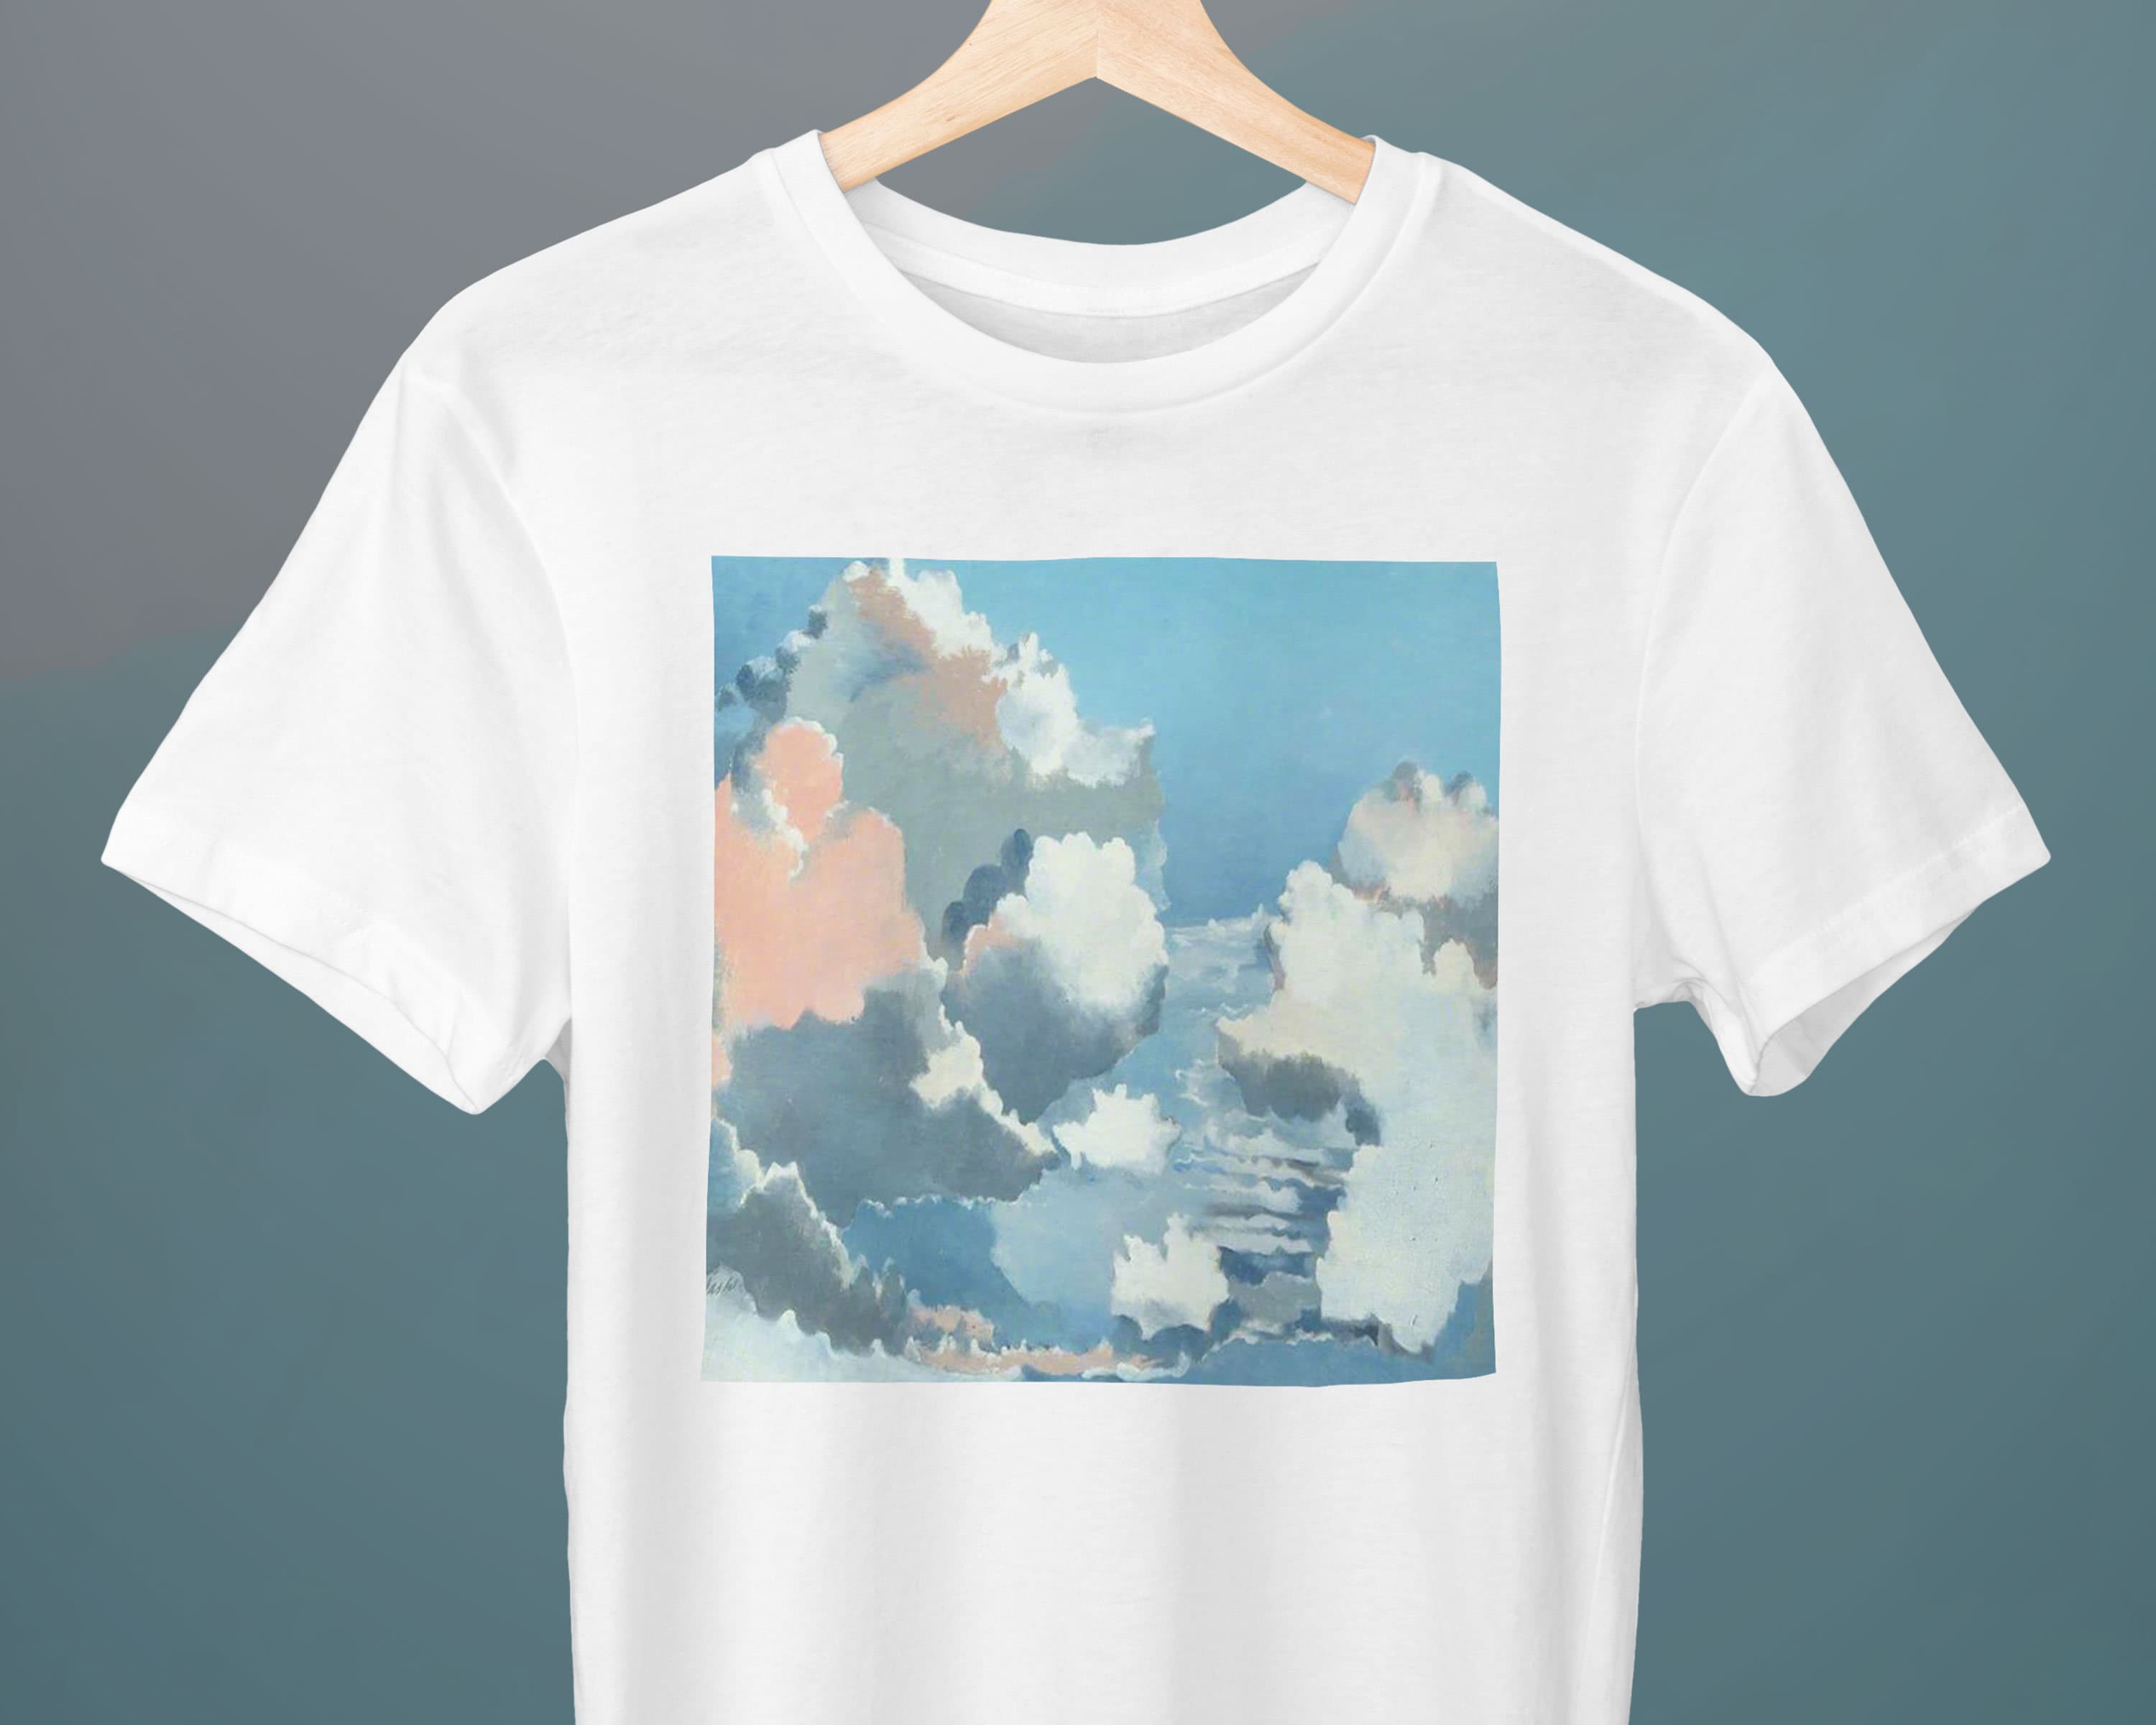 Blue Cloud Womens Shirt Prince Vaporwave Aesthetic Blue Sky 